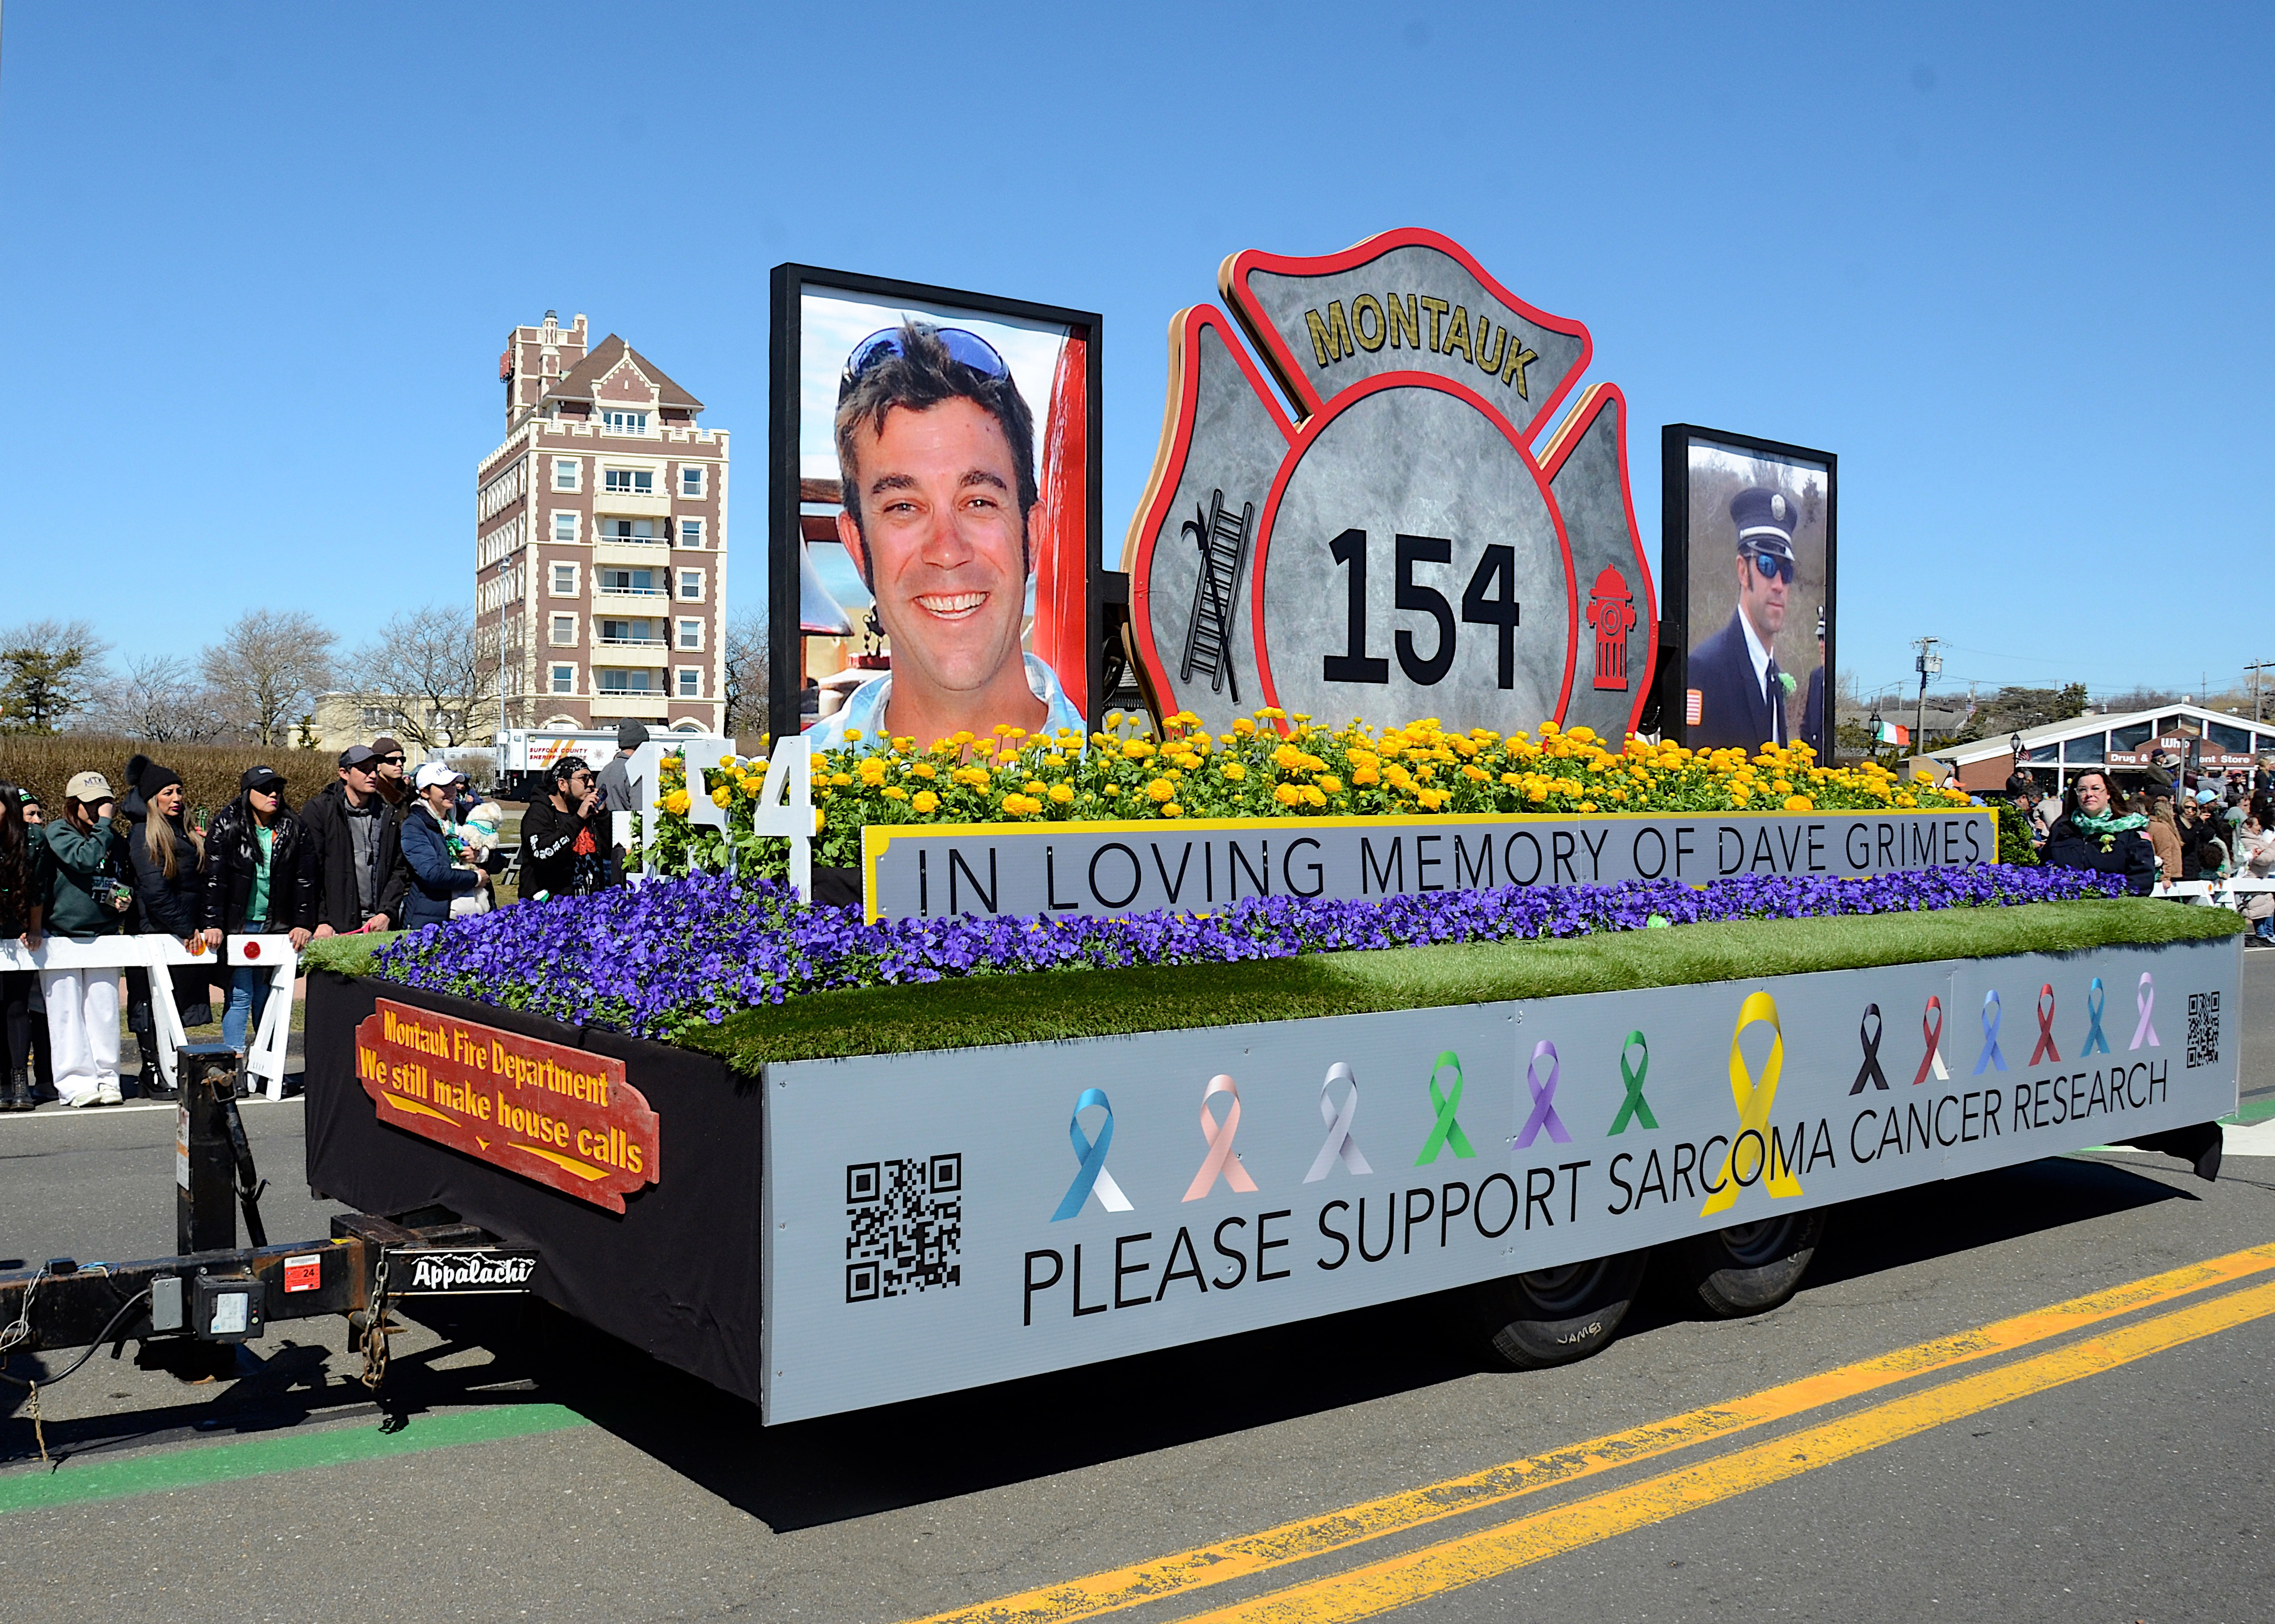 The Montauk Fire Department float honoring David Grimes.